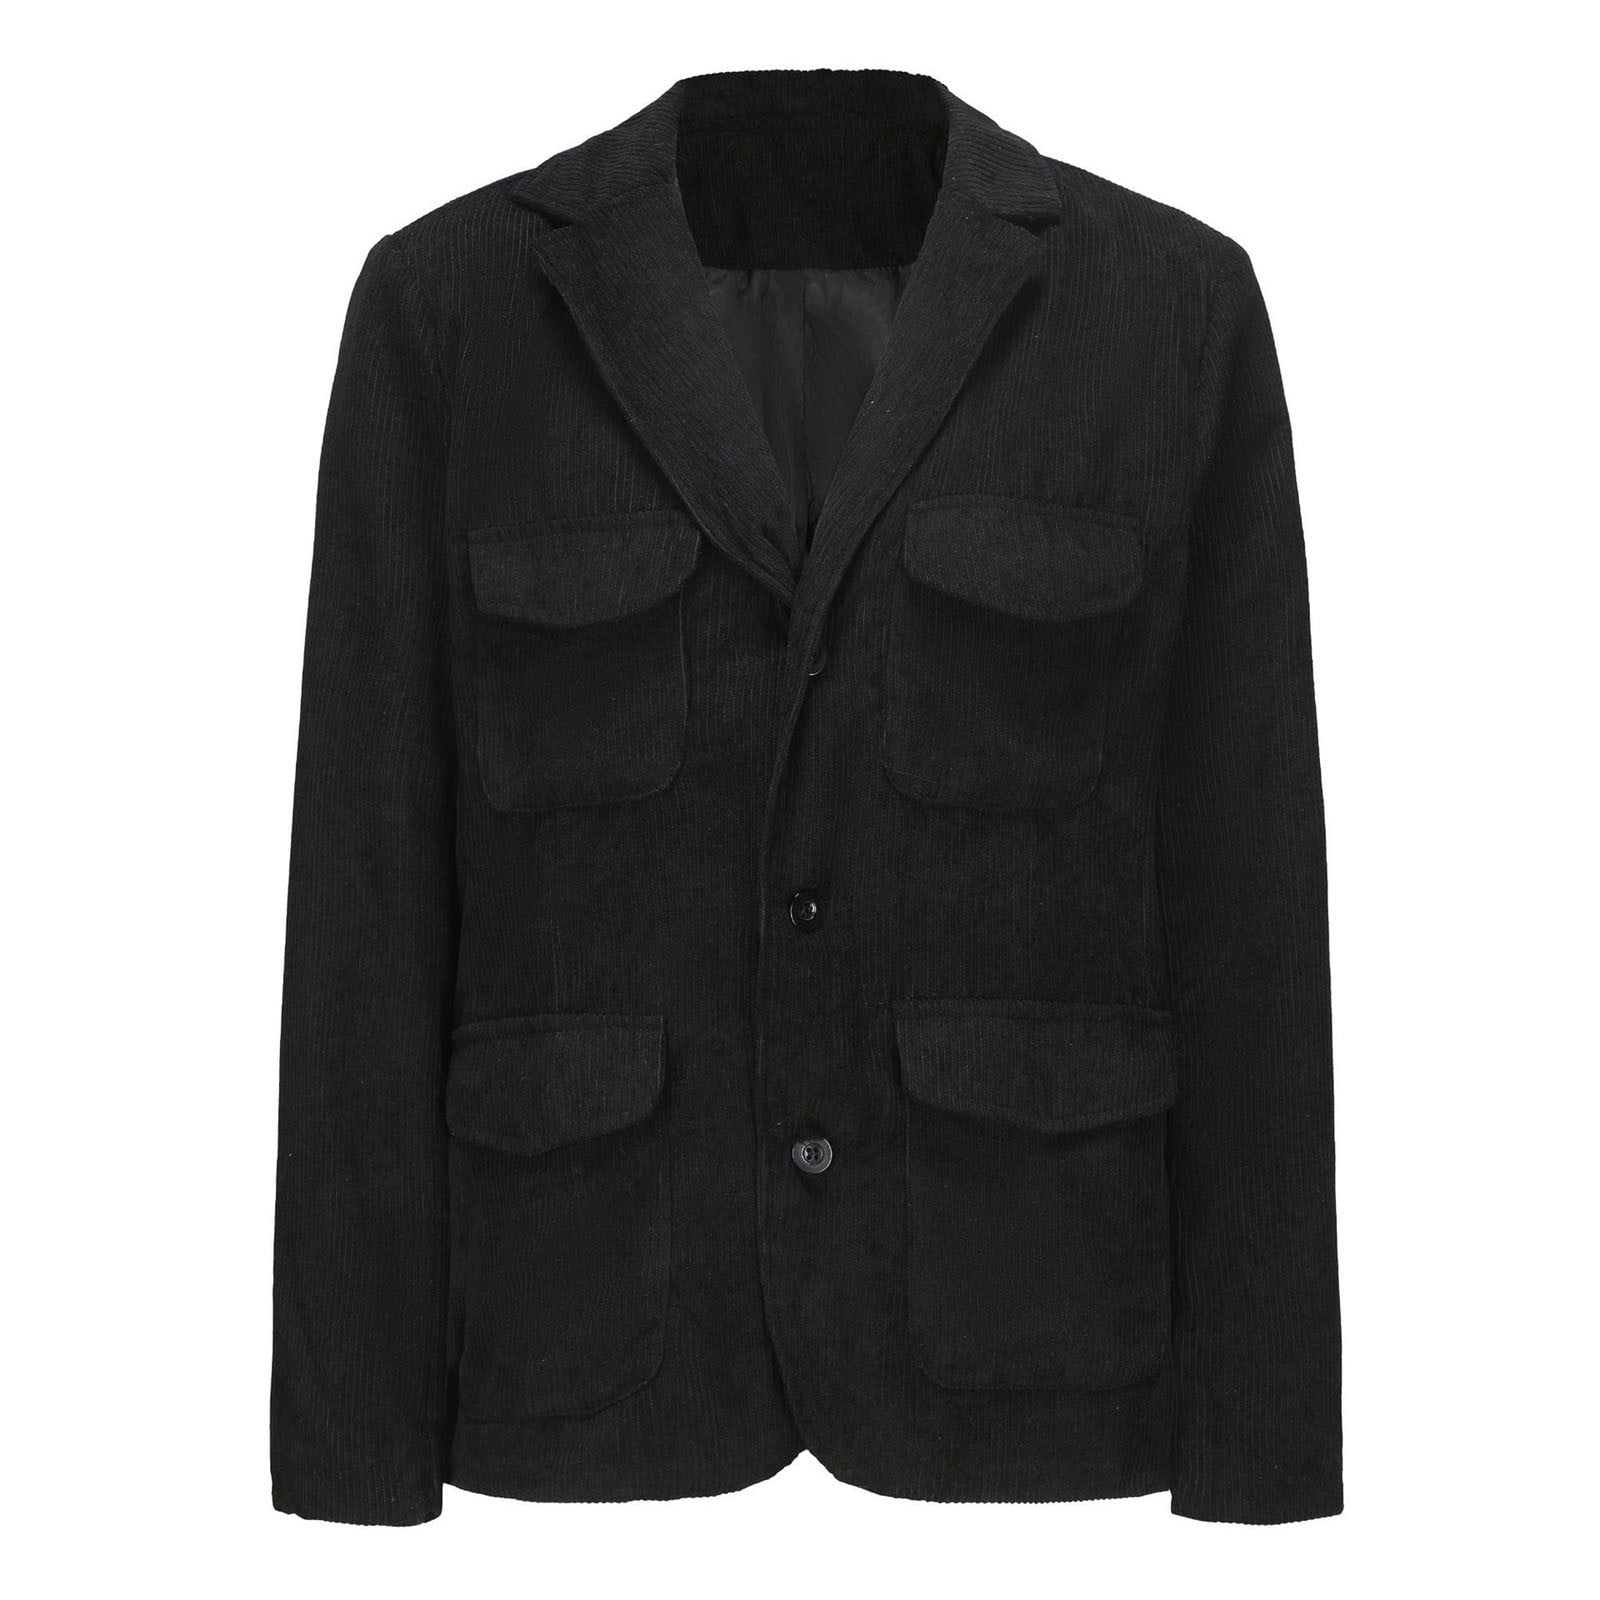 WILLBEST Jackets for Men Men's Oversized Vintage Corduroy Notched Lapel ...